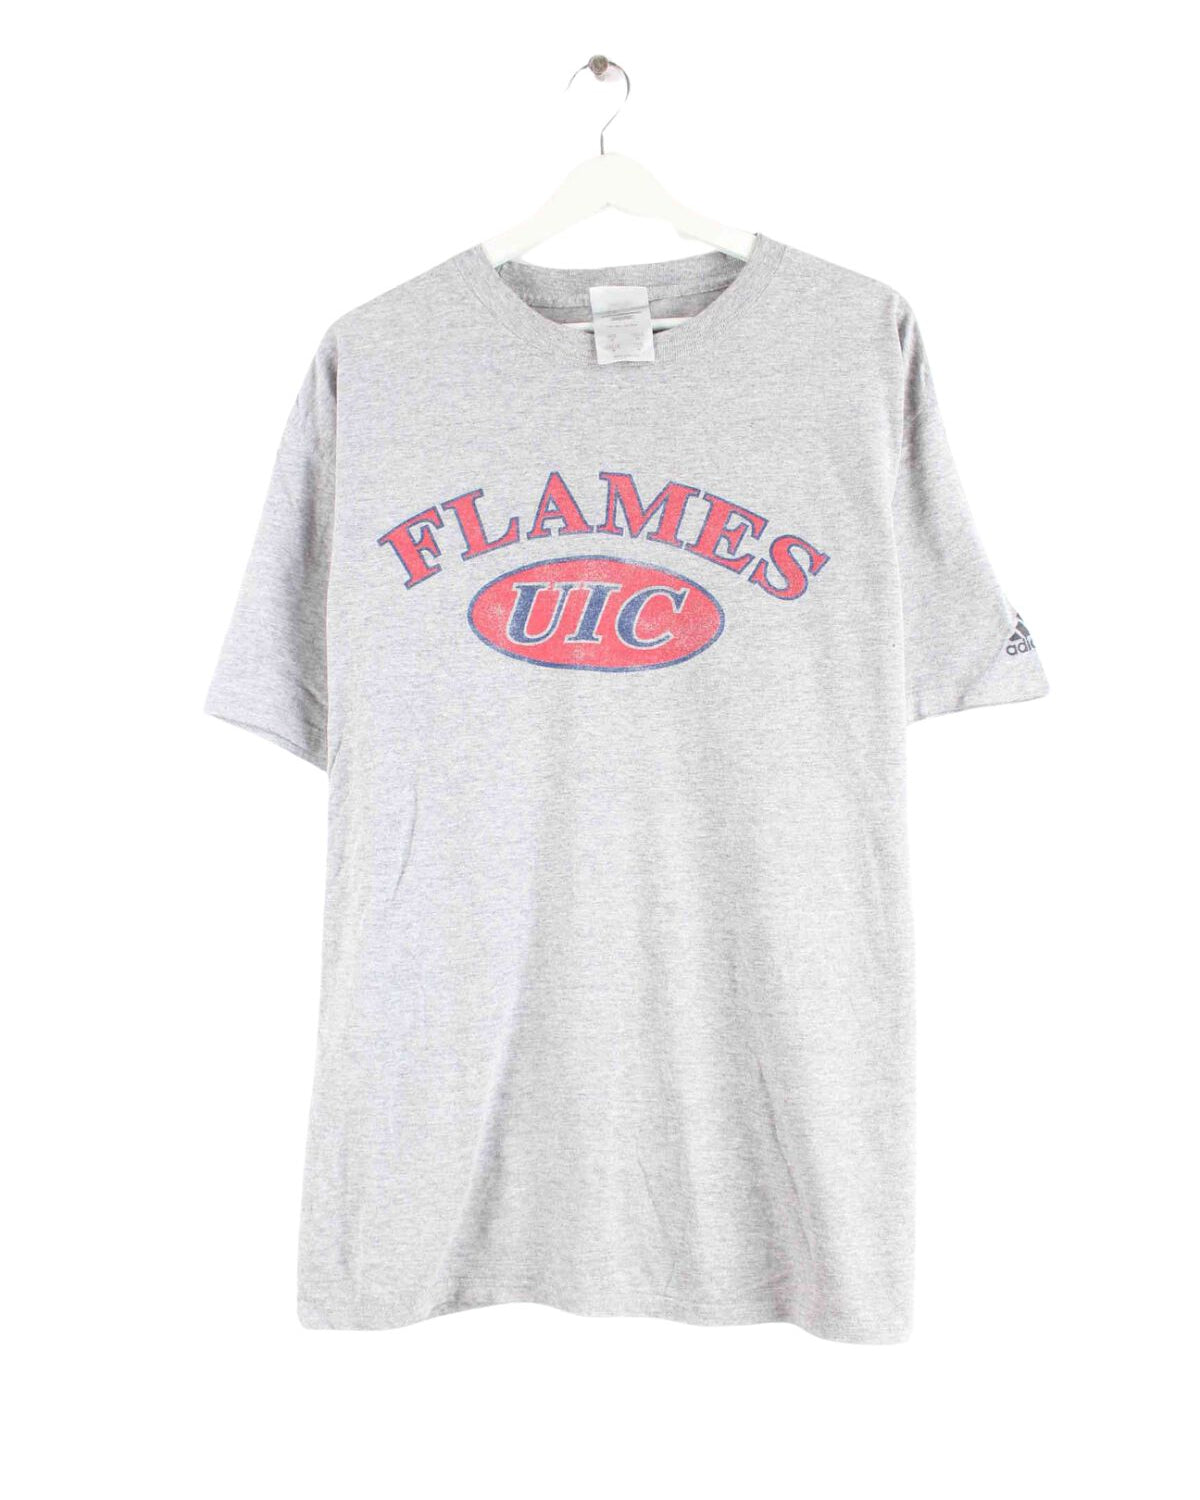 Adidas Flames UIC Print T-Shirt Grau M (front image)